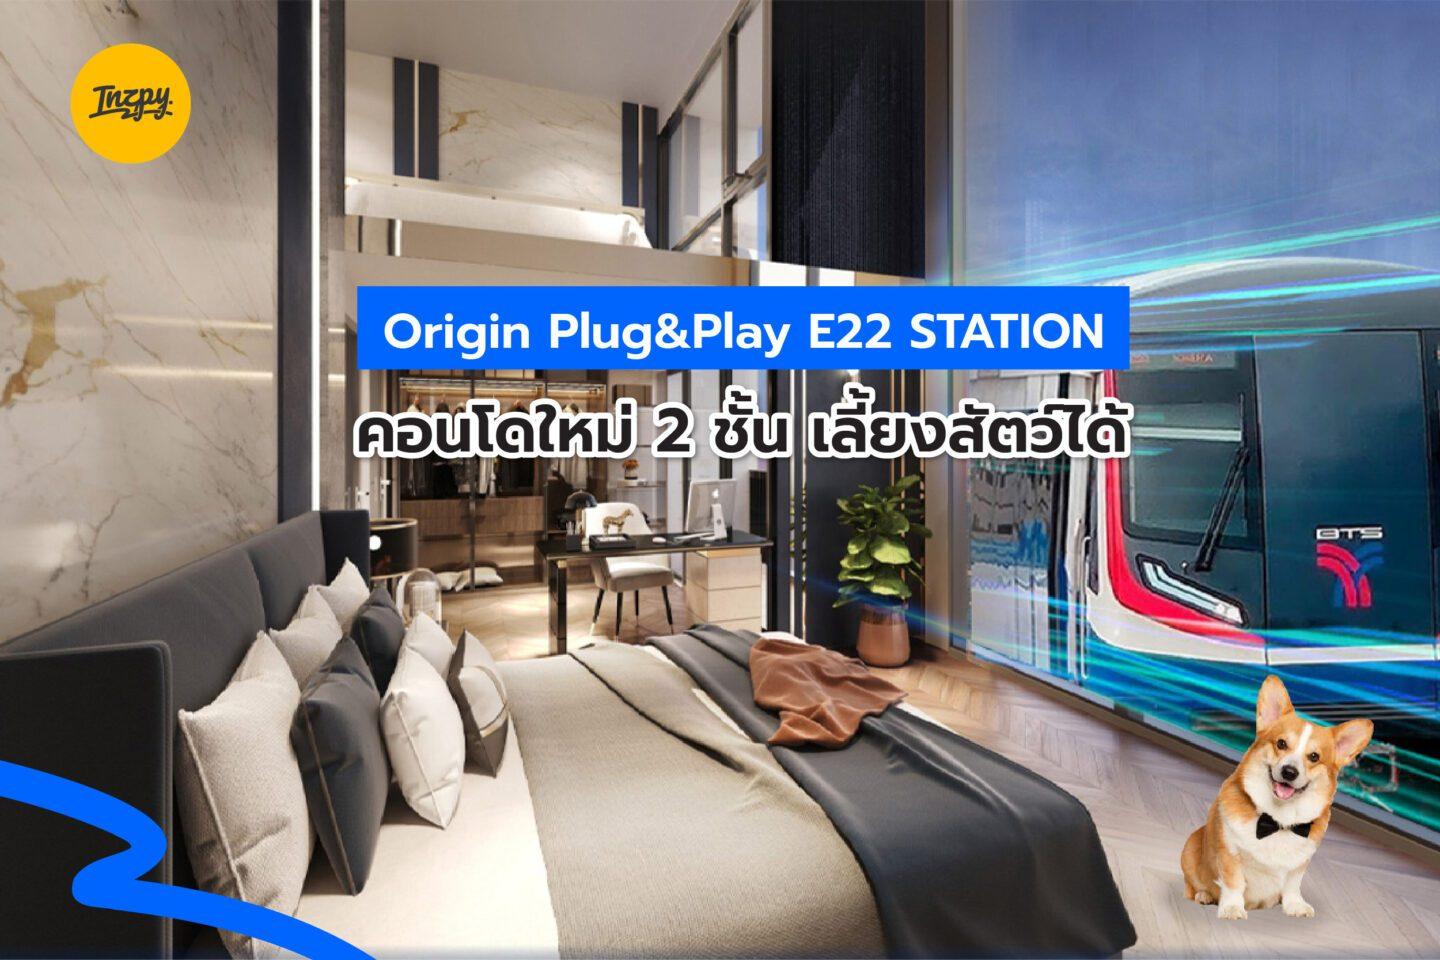 Origin Plug & Play E22 STATION คอนโดใหม่ 2 ชั้น เลี้ยงสัตว์ได้